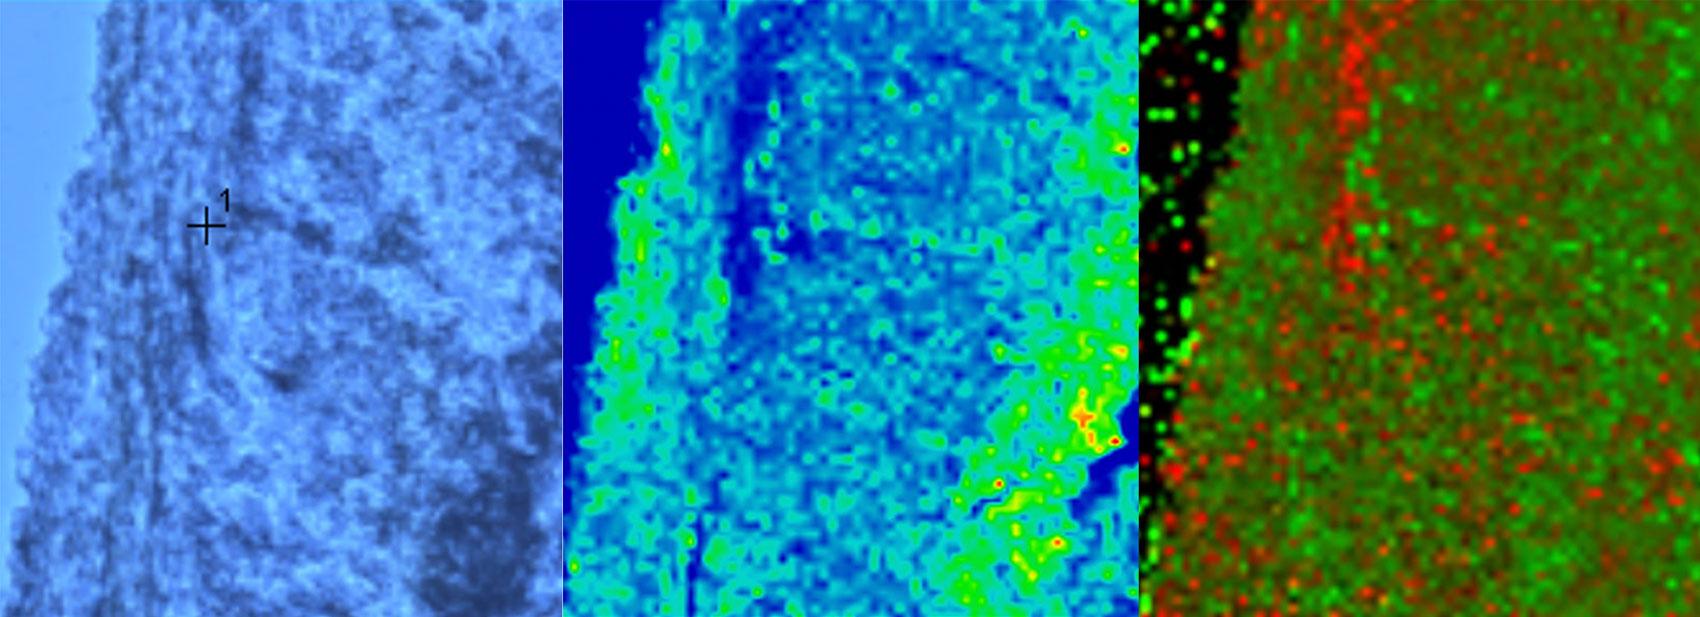 Three microscopy images of brain tissue